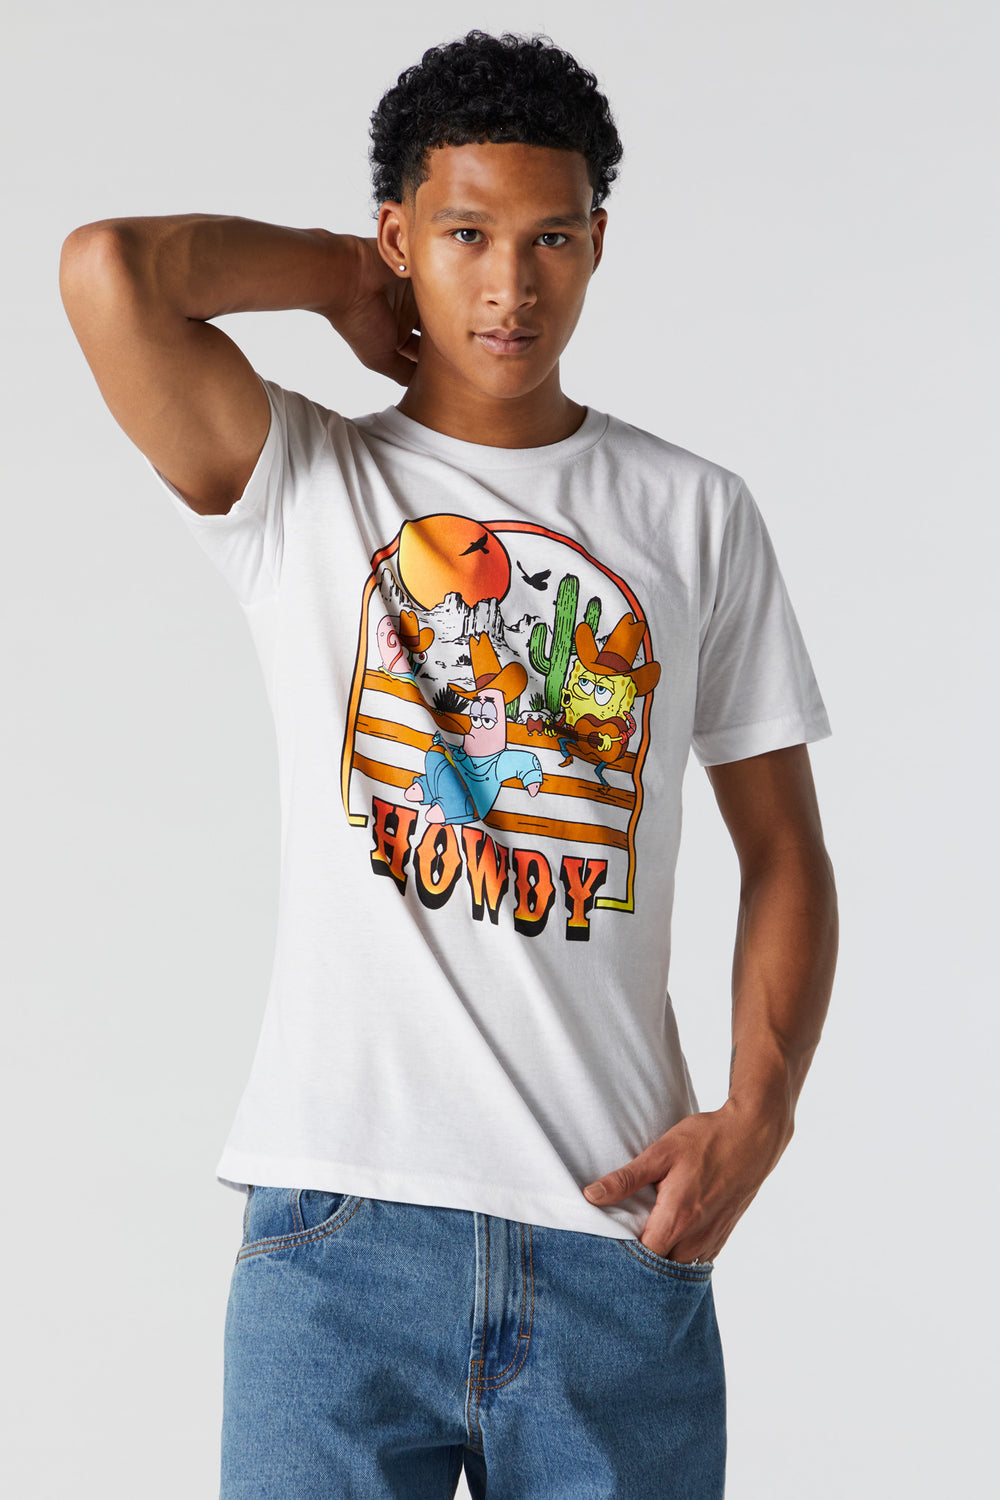 Howdy SpongeBob Graphic T-Shirt Howdy SpongeBob Graphic T-Shirt 1